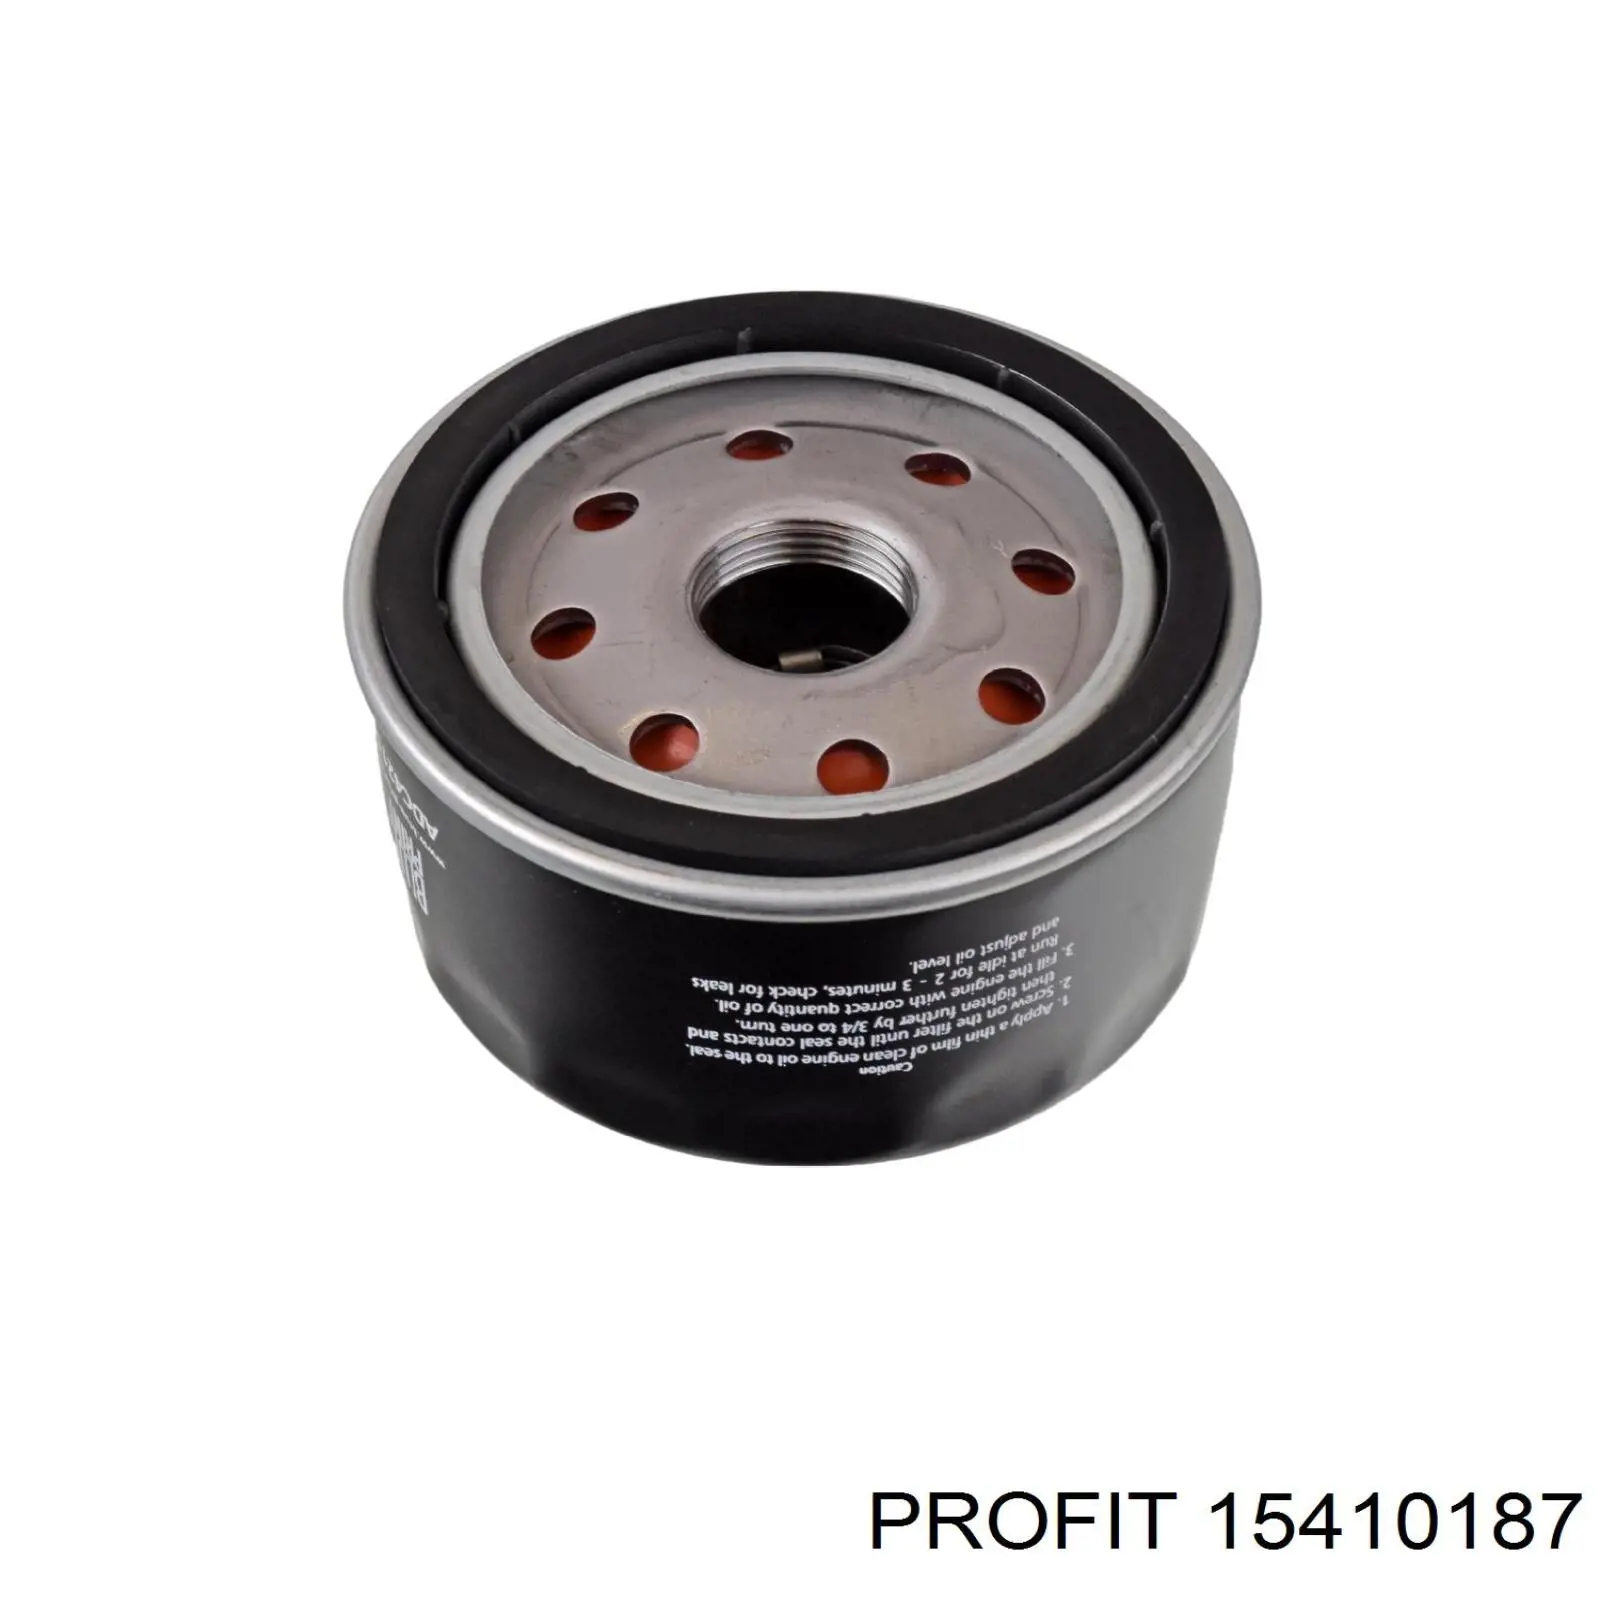 1541-0187 Profit filtro de aceite